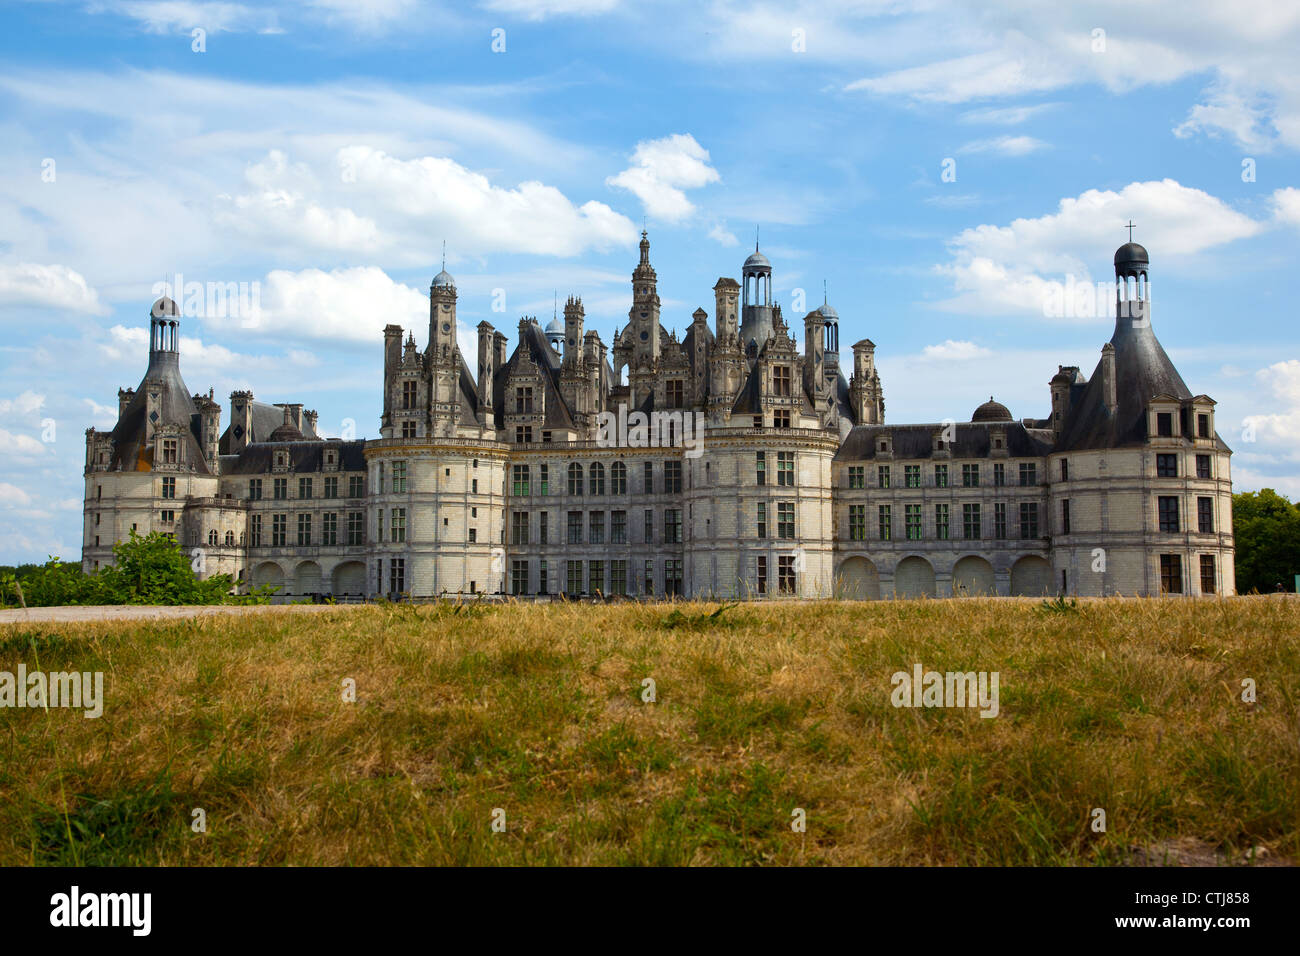 Chateau de Chambord im Loire Tal von Frankreich Stockfoto